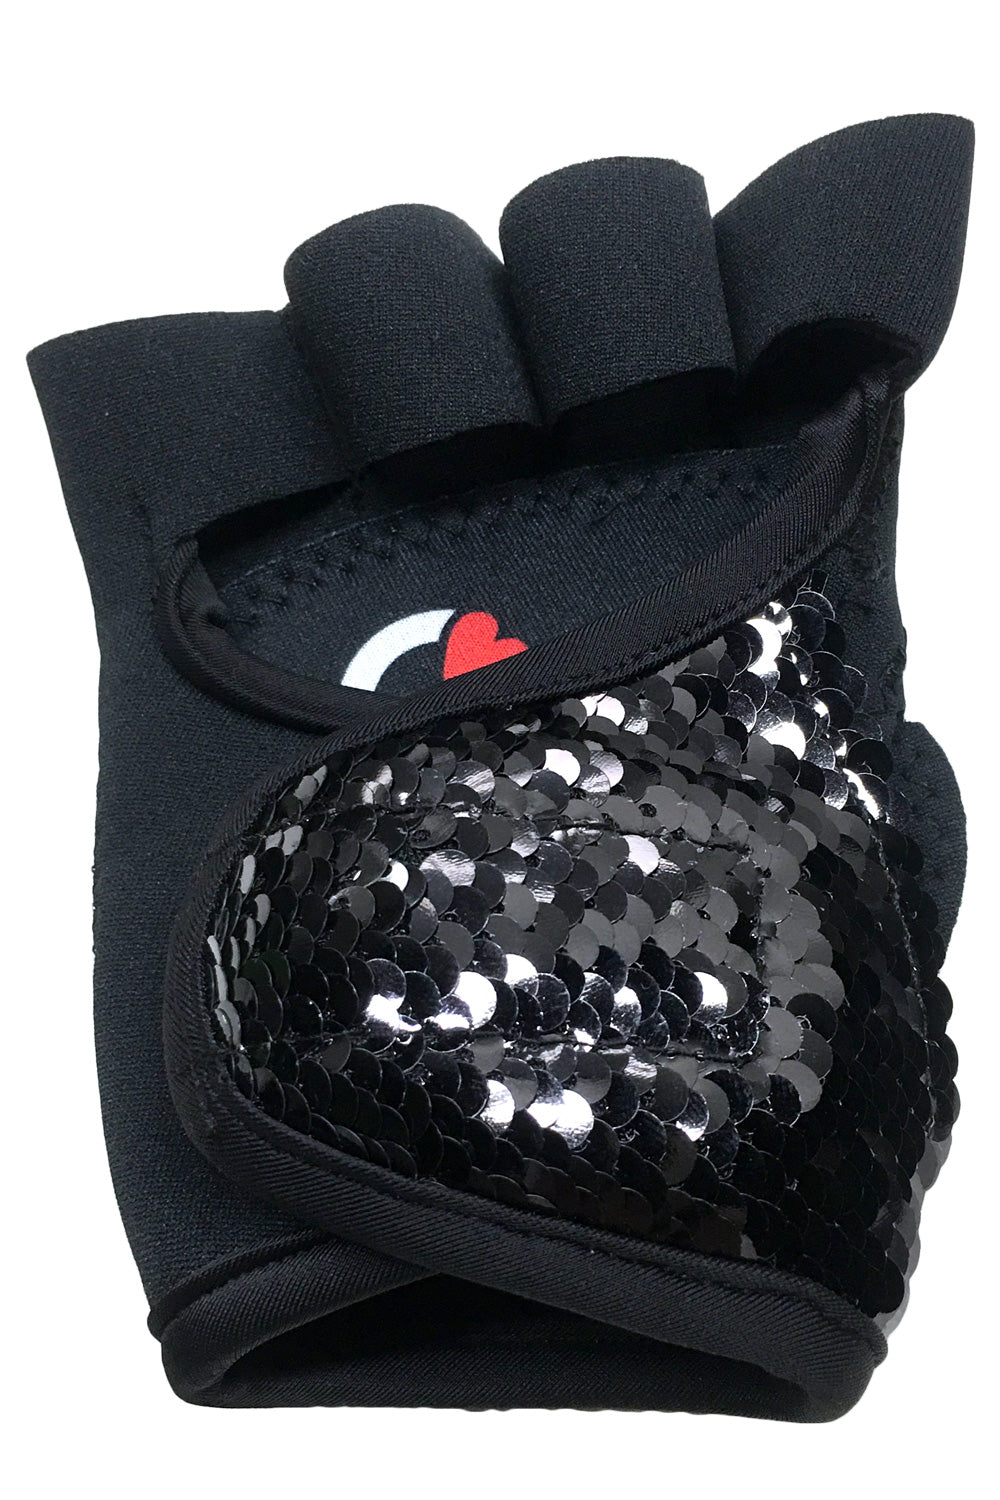 [Buy Best Women's Workout Gloves Online] - G-Loves